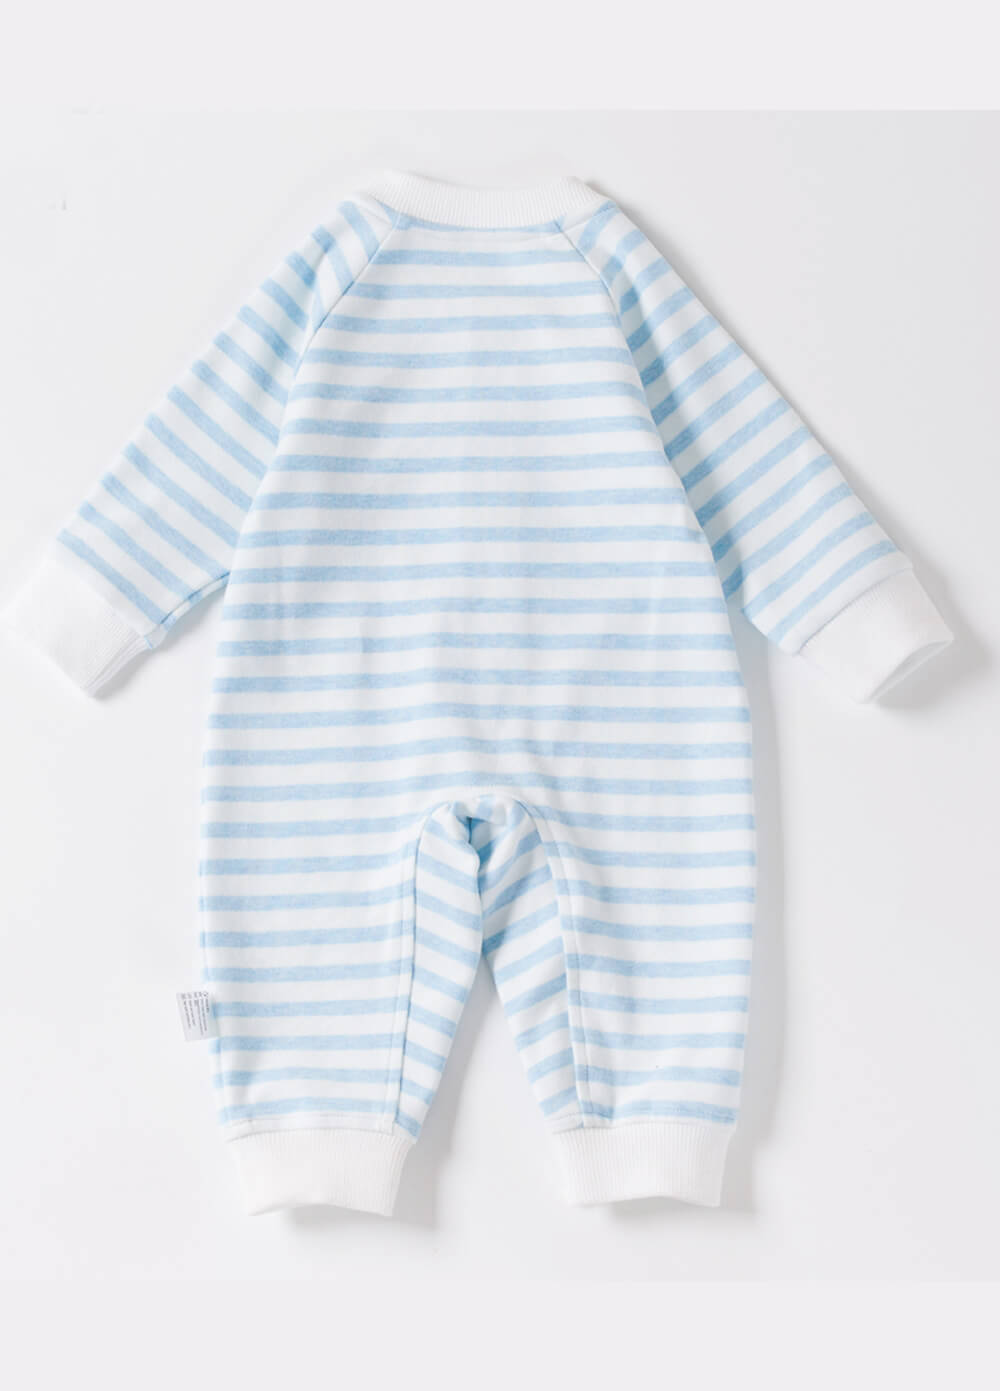 Lille Newborn Baby Onesie in Blue Stripes from Lait & Co